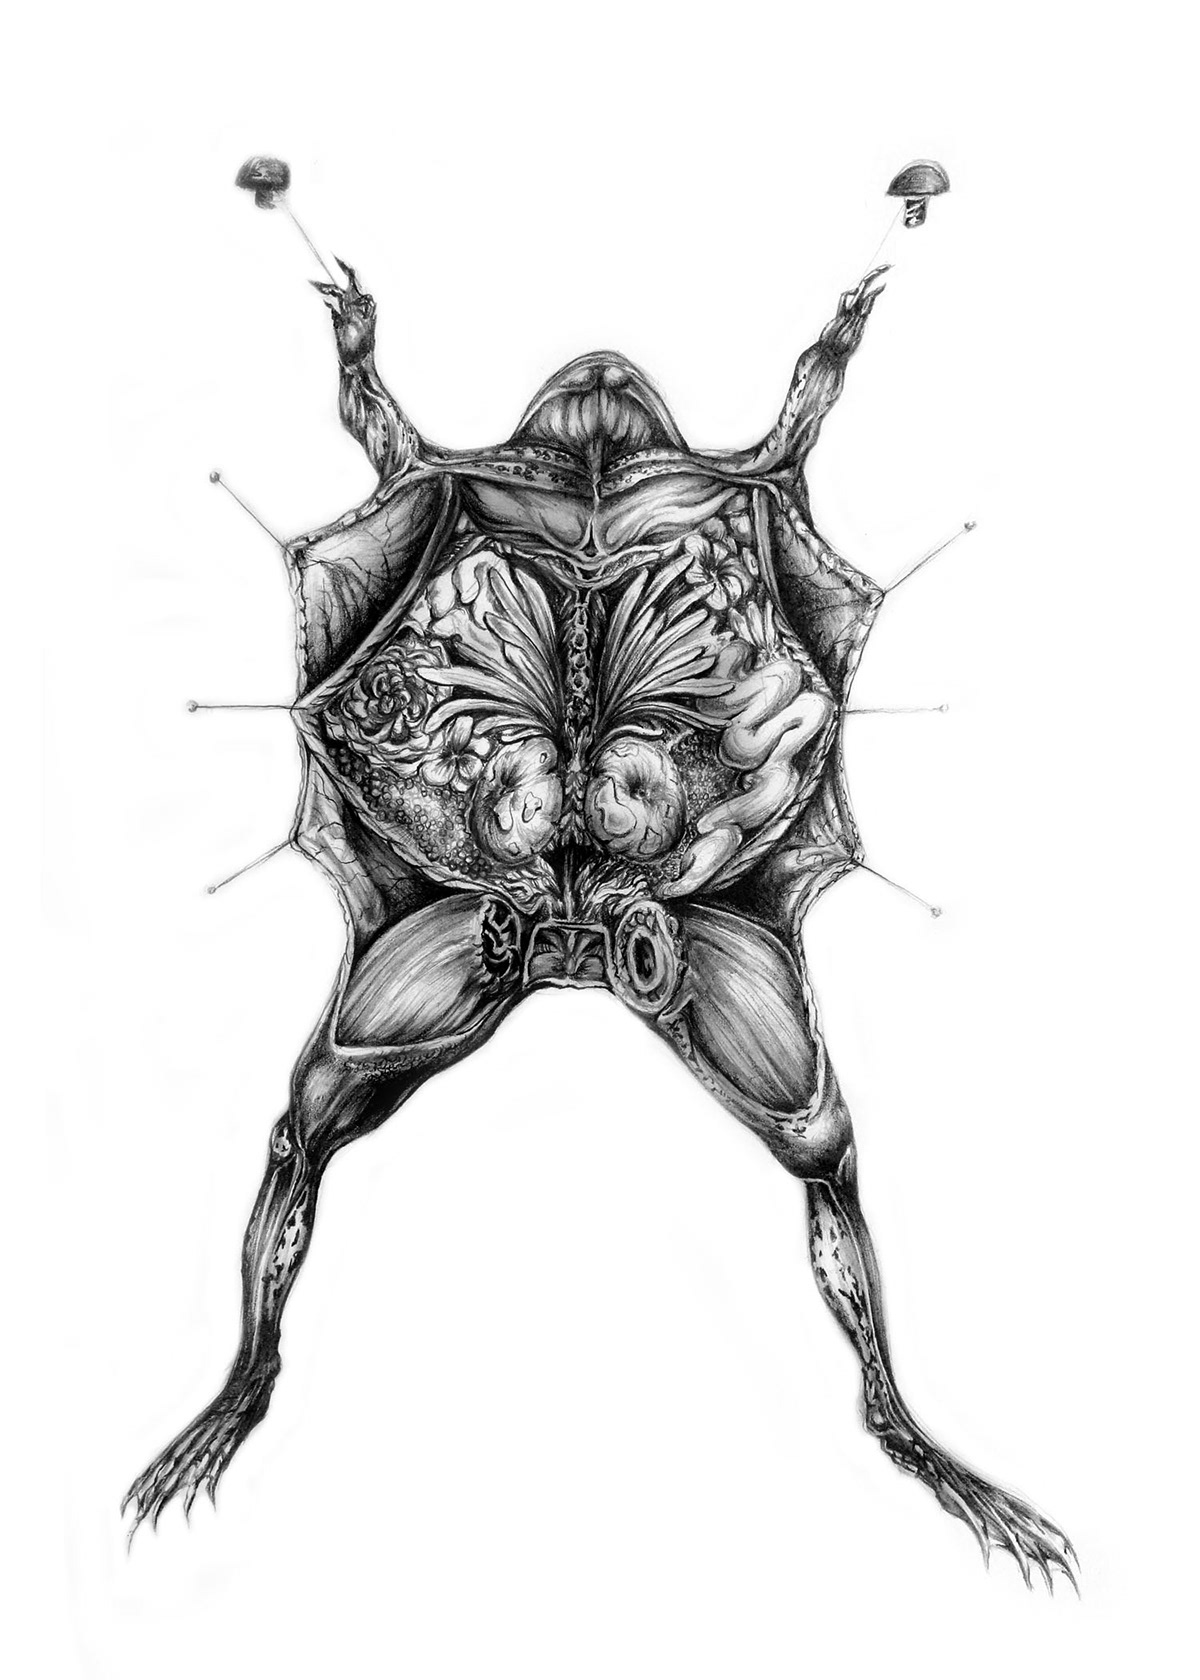 scientific illustration anatomy anatomical illustration biology zoology art Nature pencil sketch botanical illustration